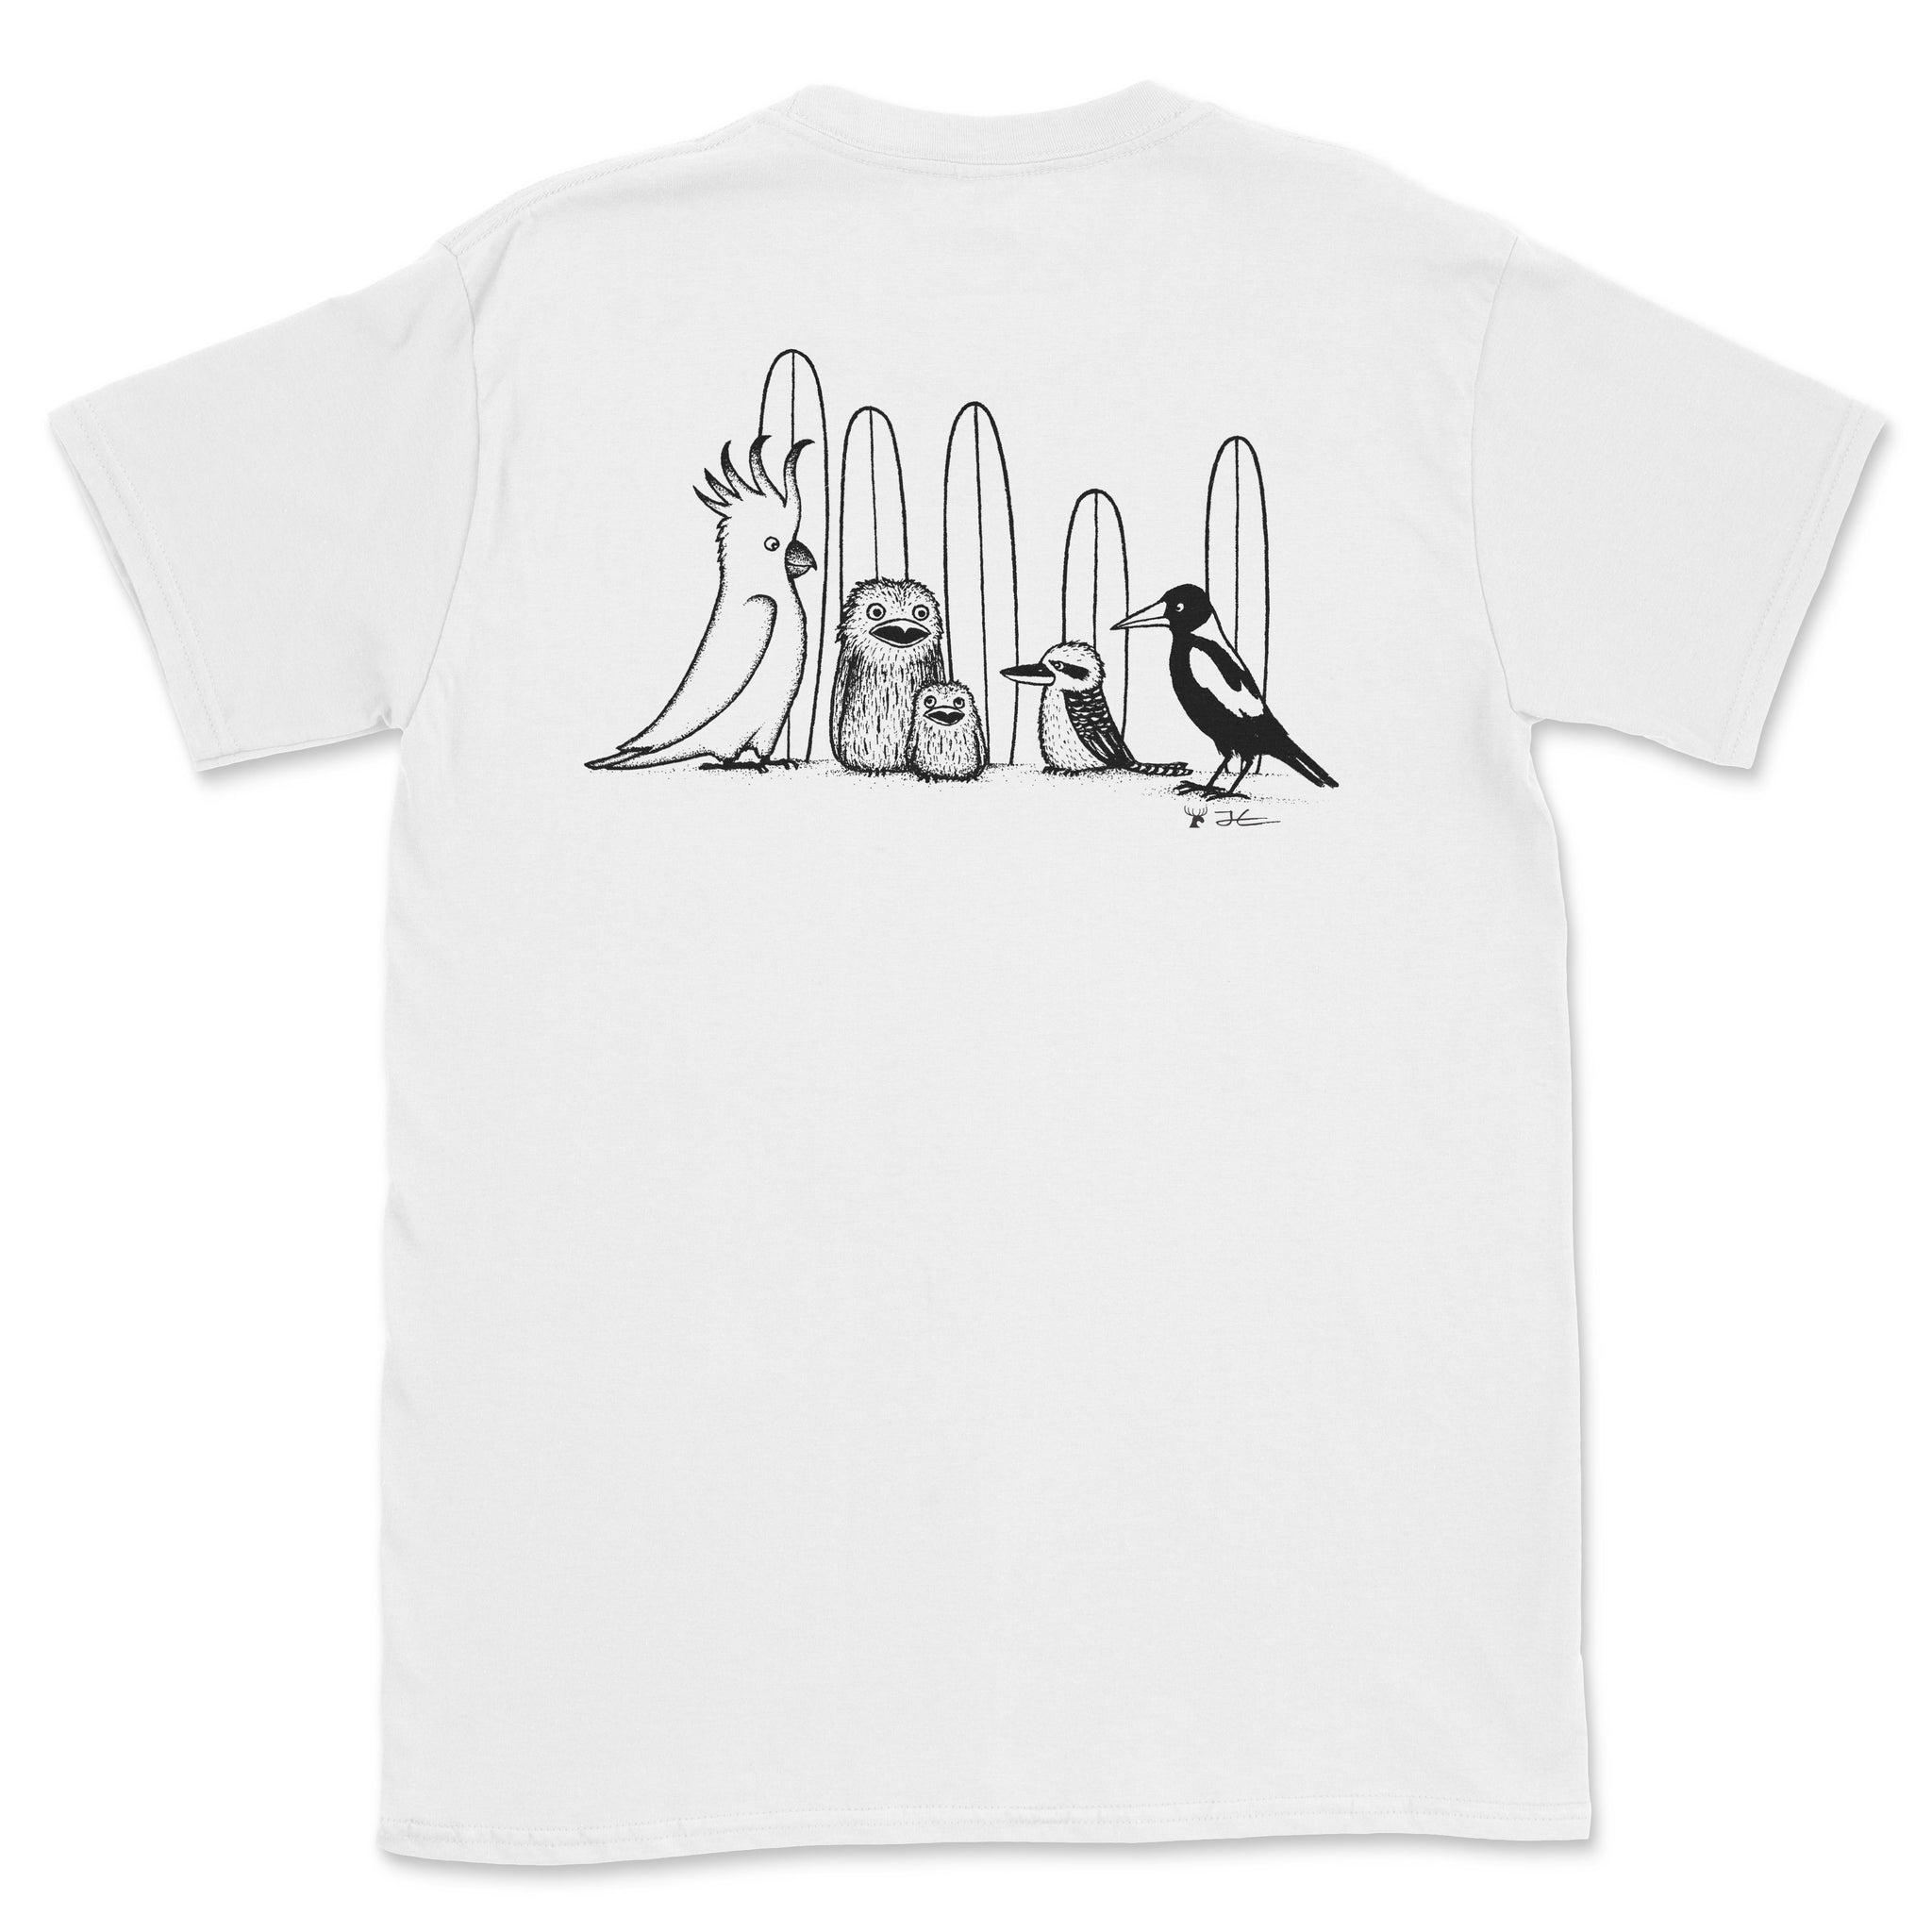 Buy Surfing Unicorn Baby T-Shirt Online. - Jonas Claesson